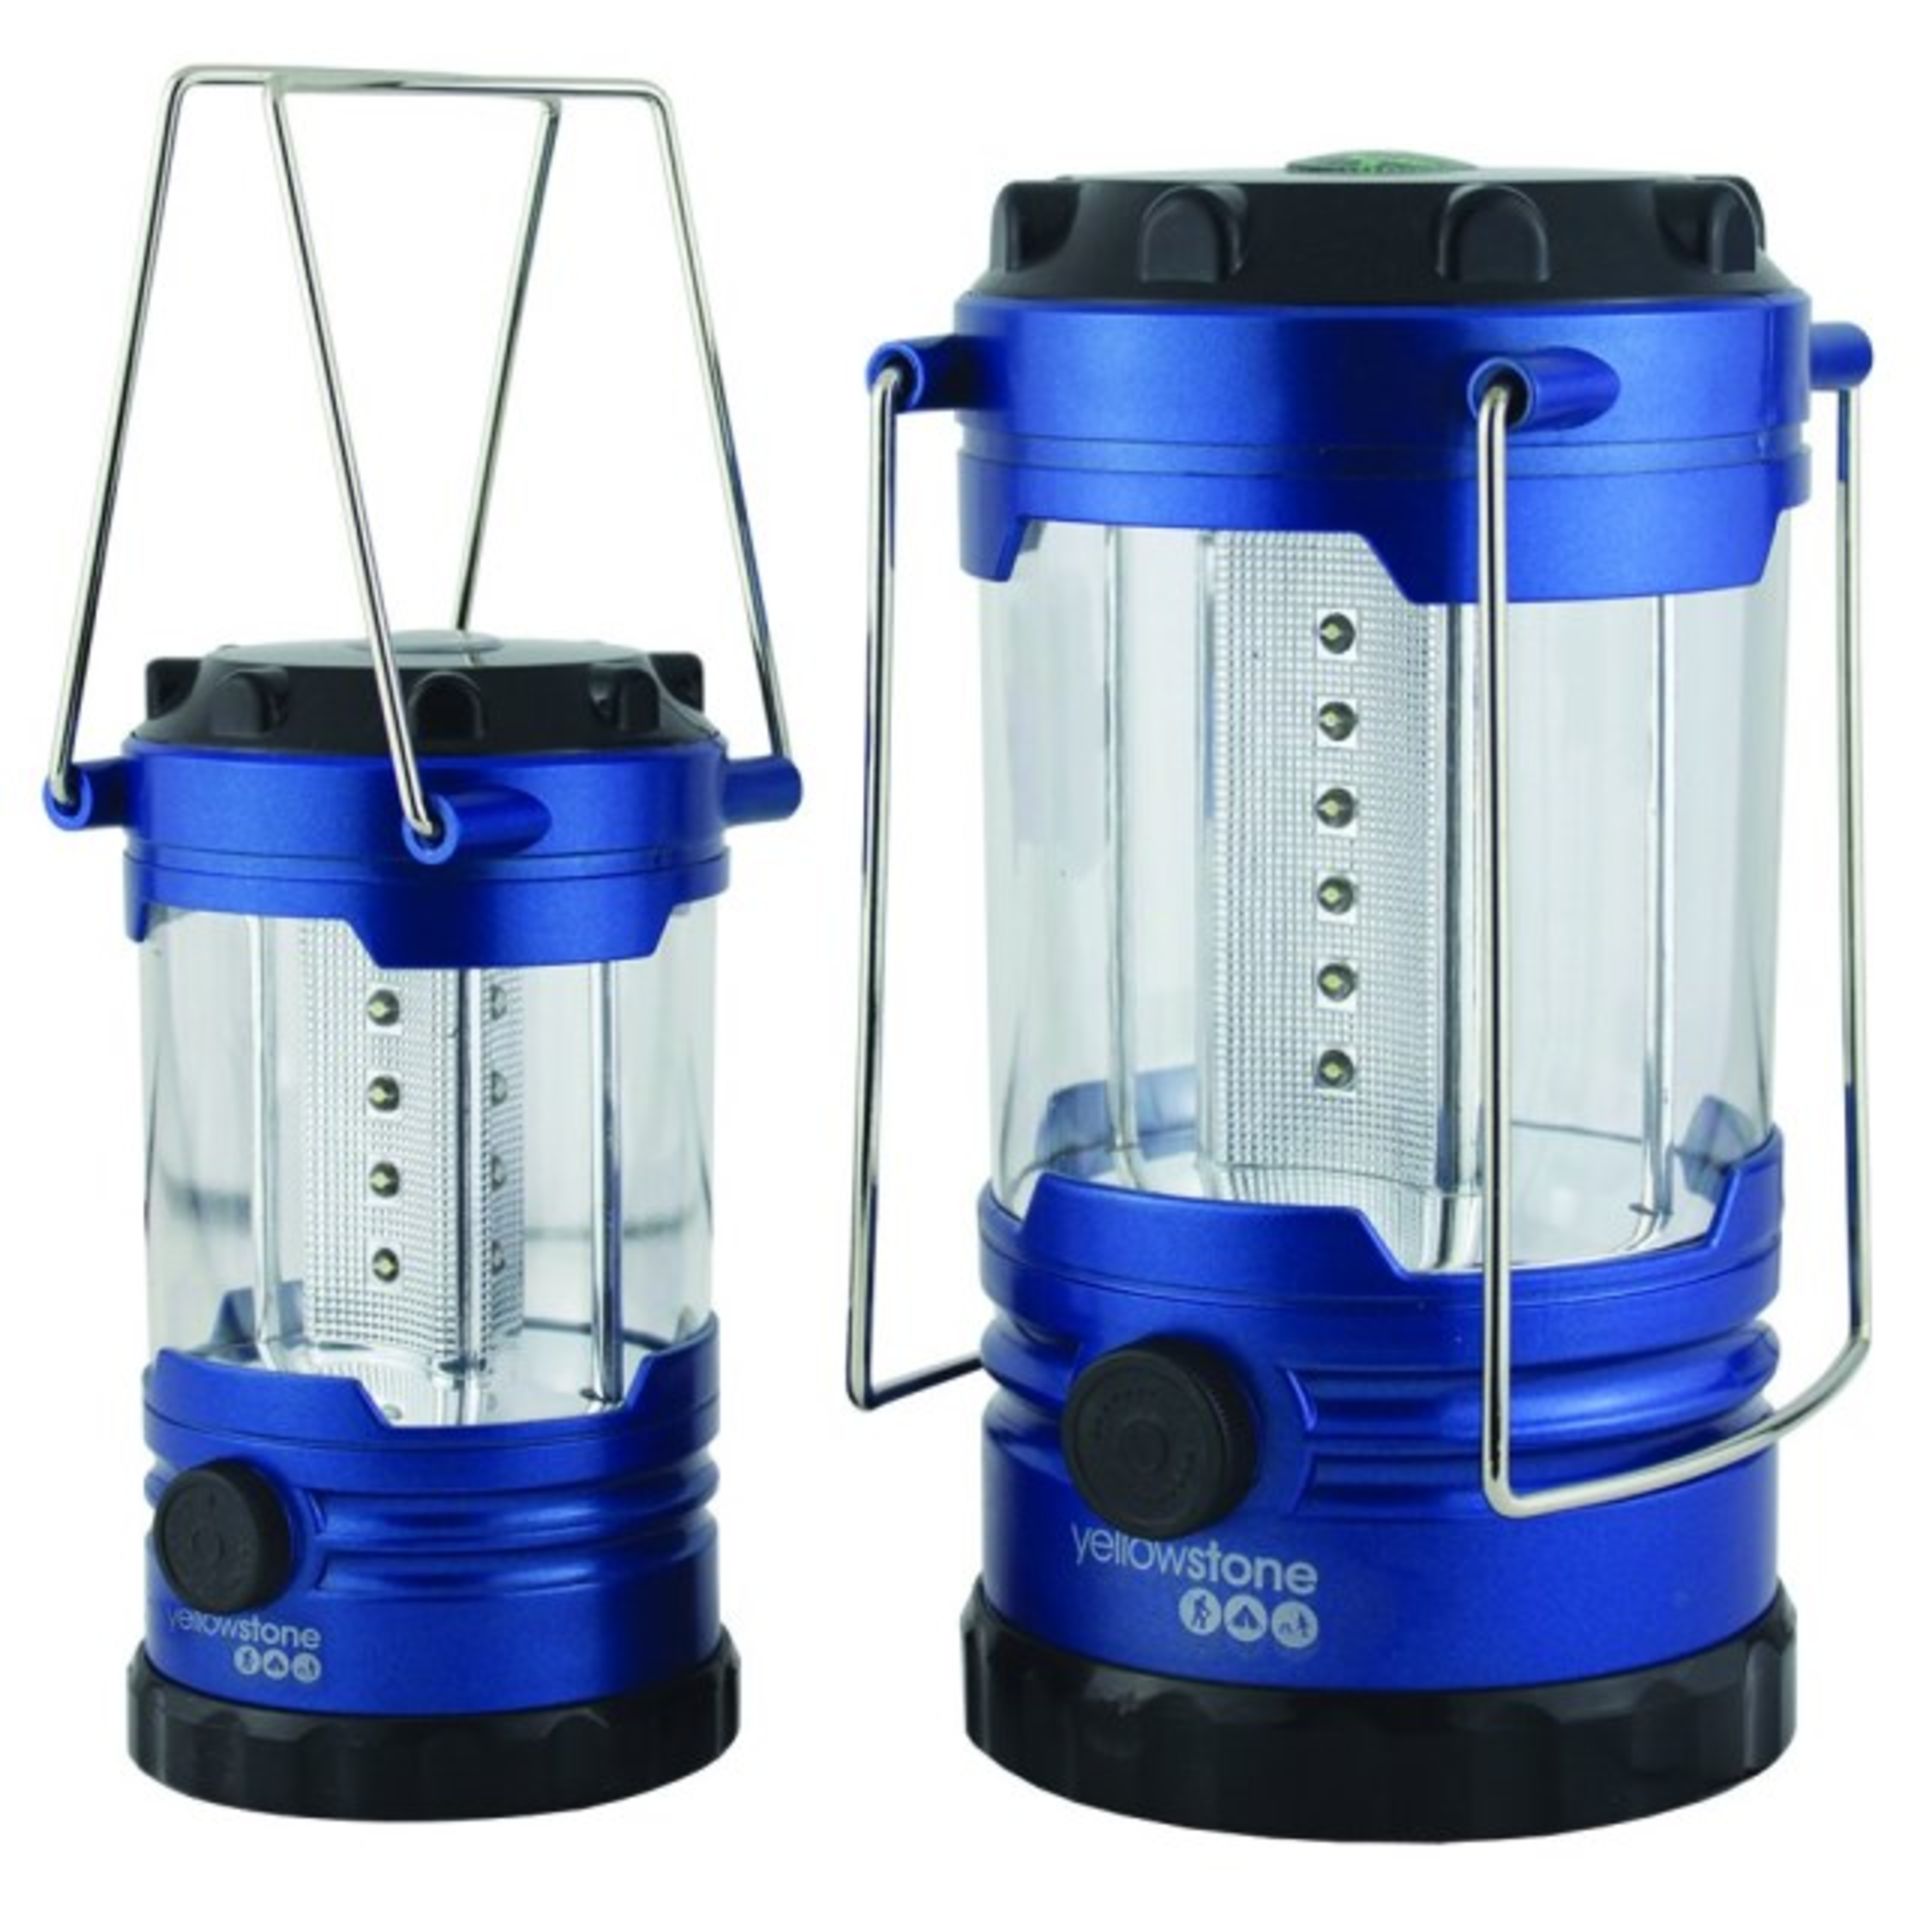 V  Grade A LED Two Lantern Set - Ultra Bright - 18 Hour Burn Time RRP £29.99